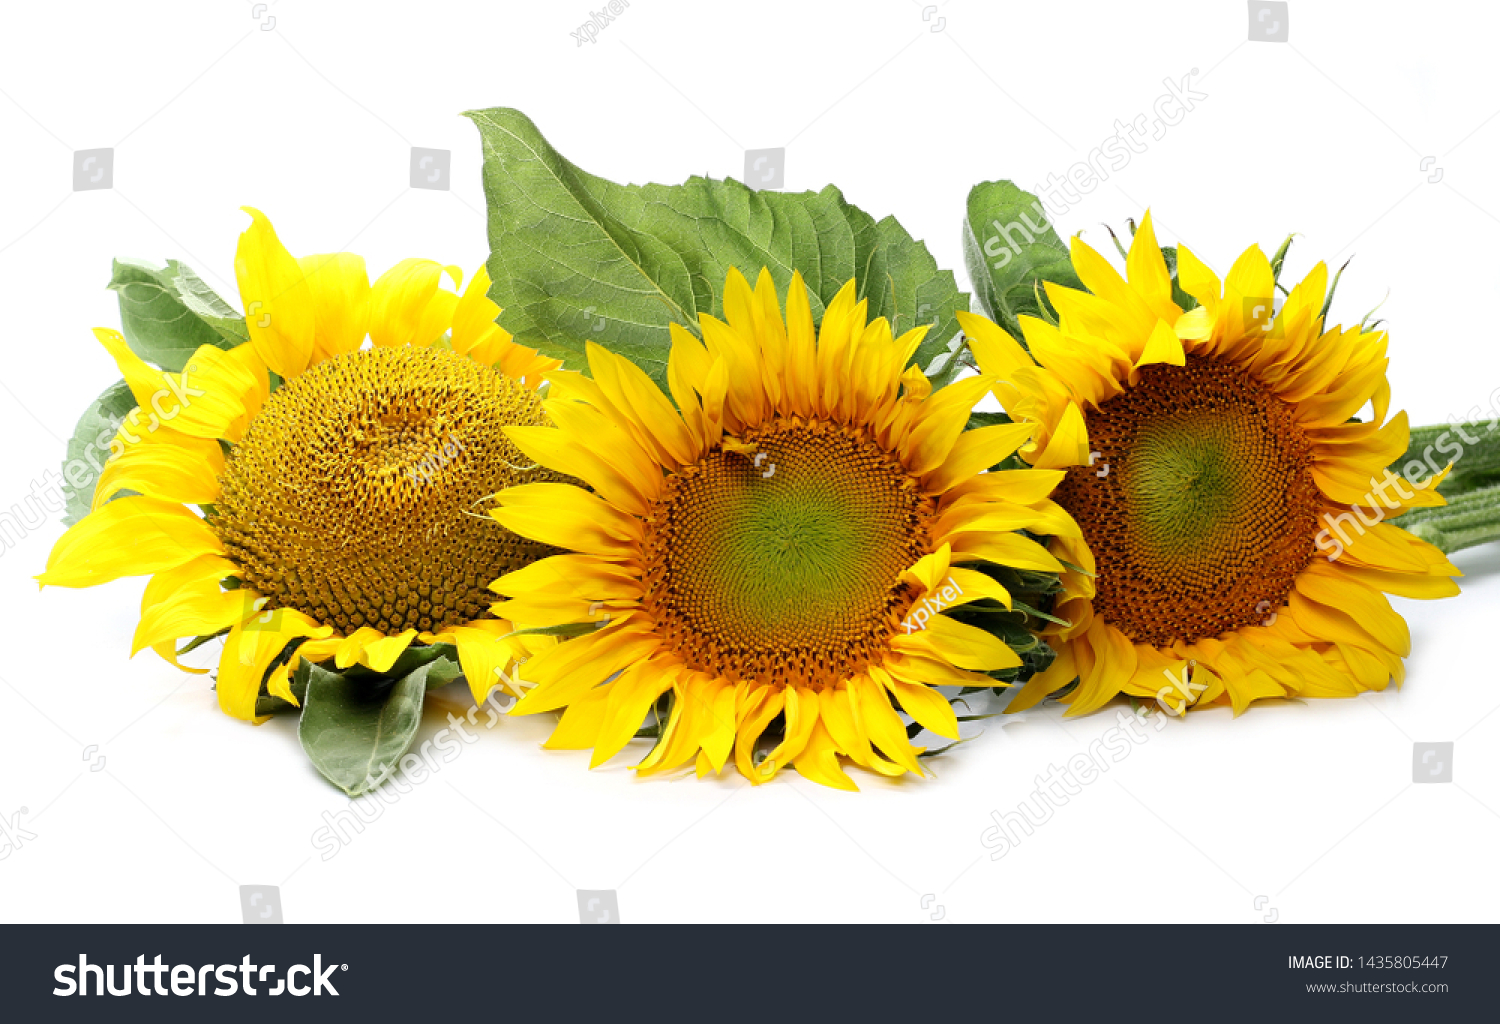 Sunflowers isolated on white background #1435805447